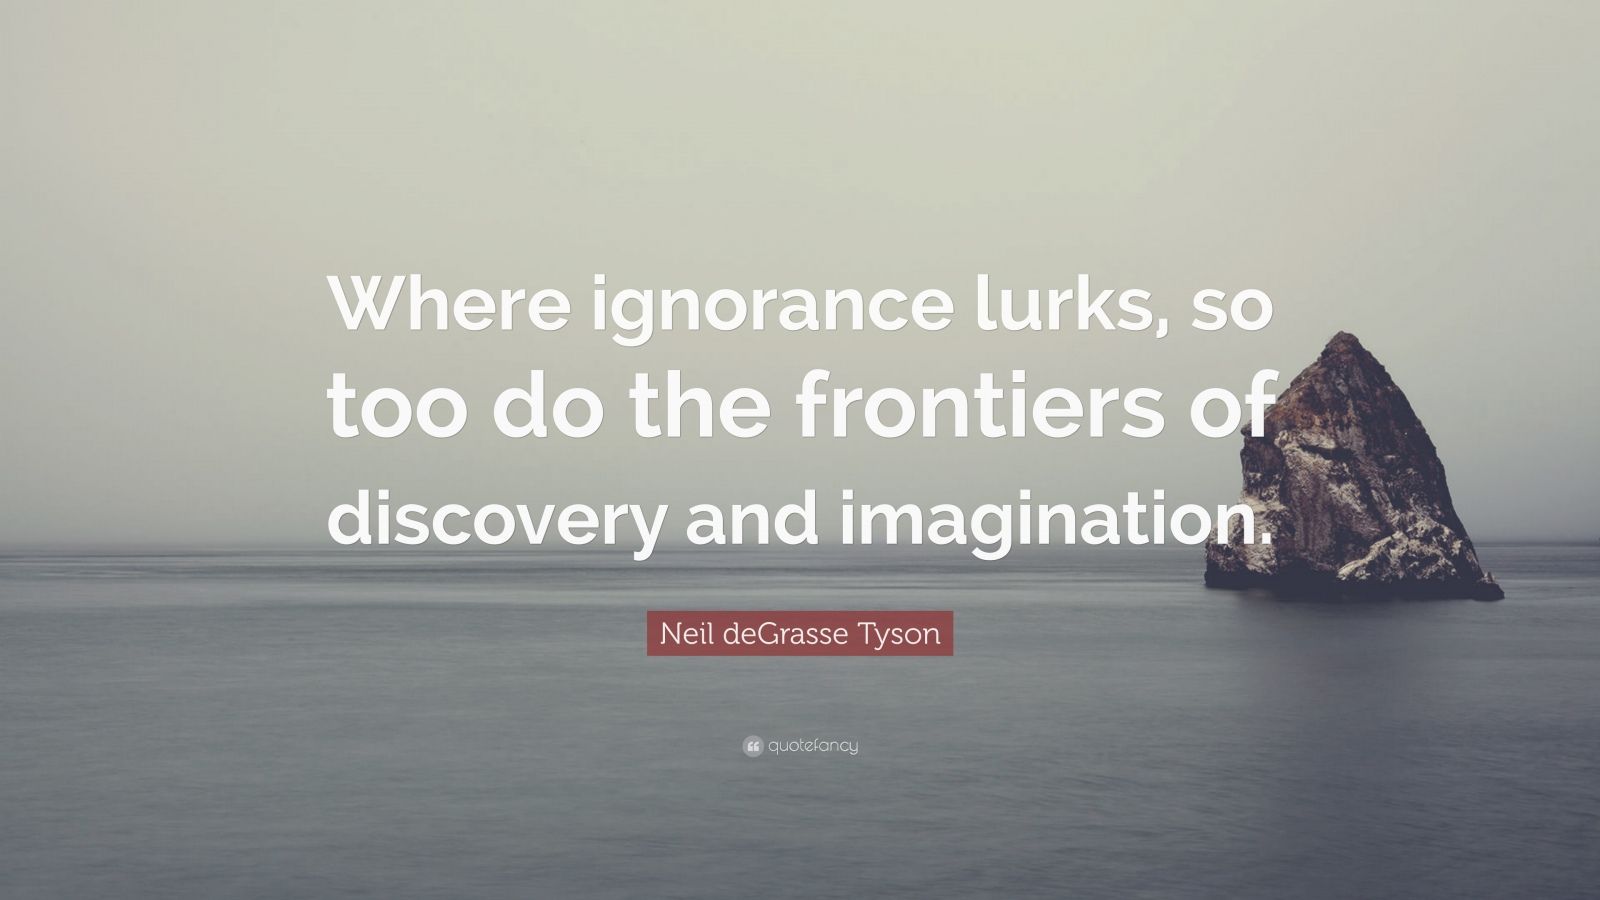 Neil deGrasse Tyson Quote: “Where ignorance lurks